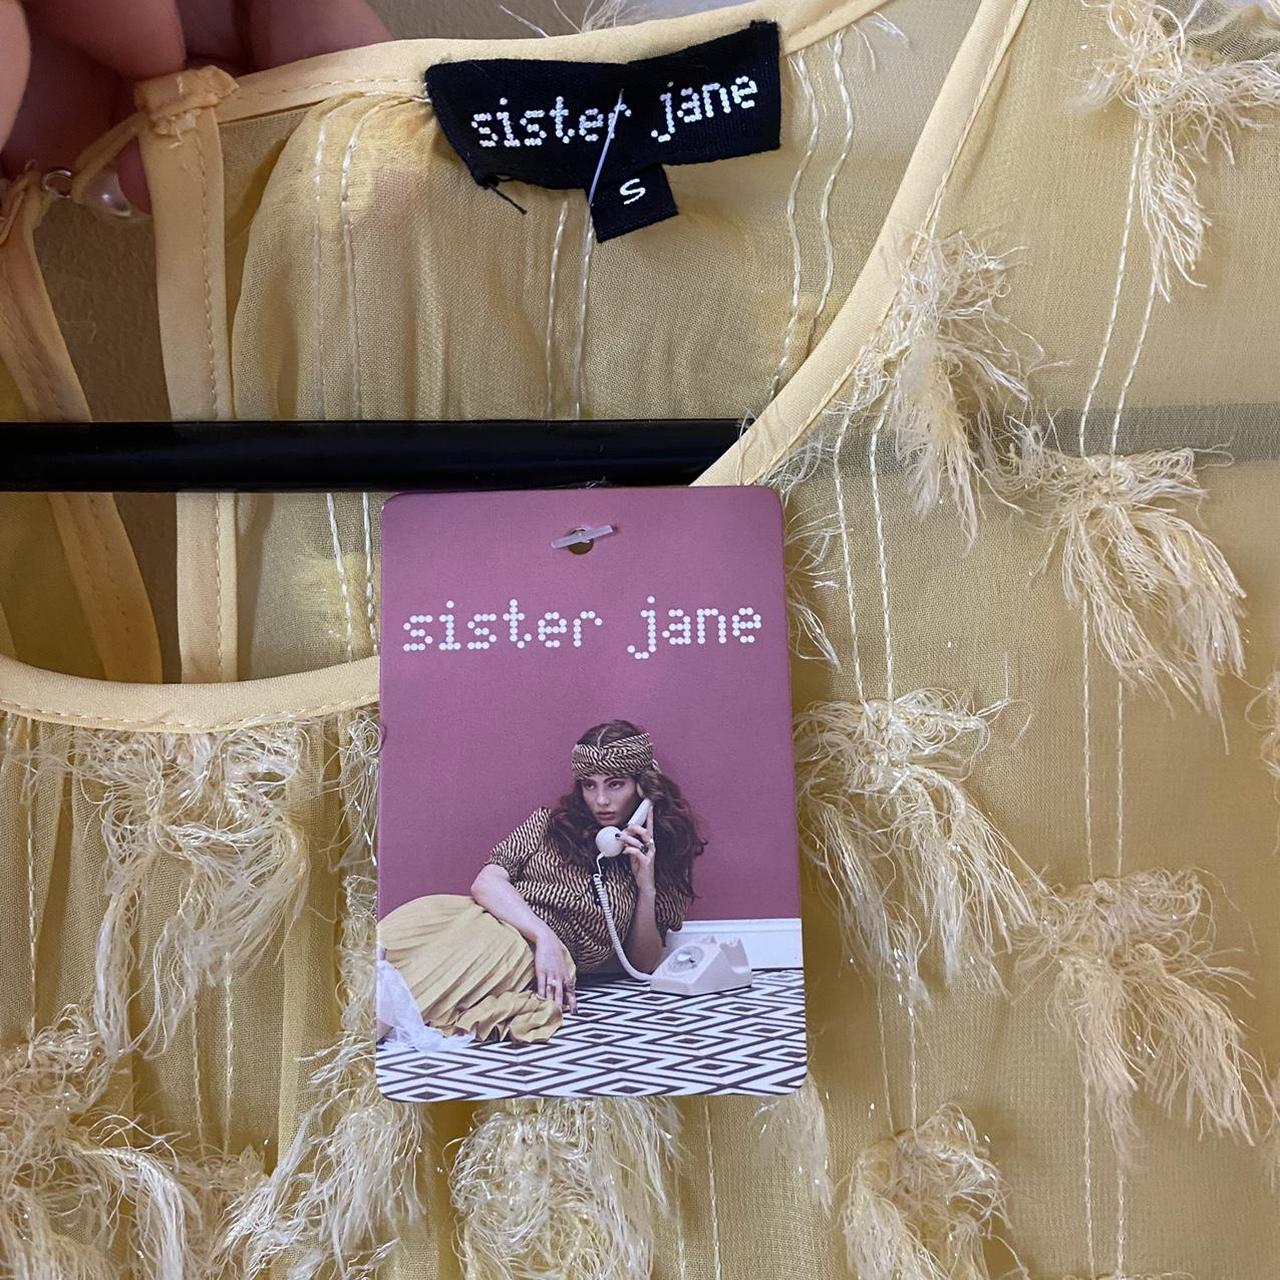 Product Image 3 - Sister Jane Yellow Dress
Brand new